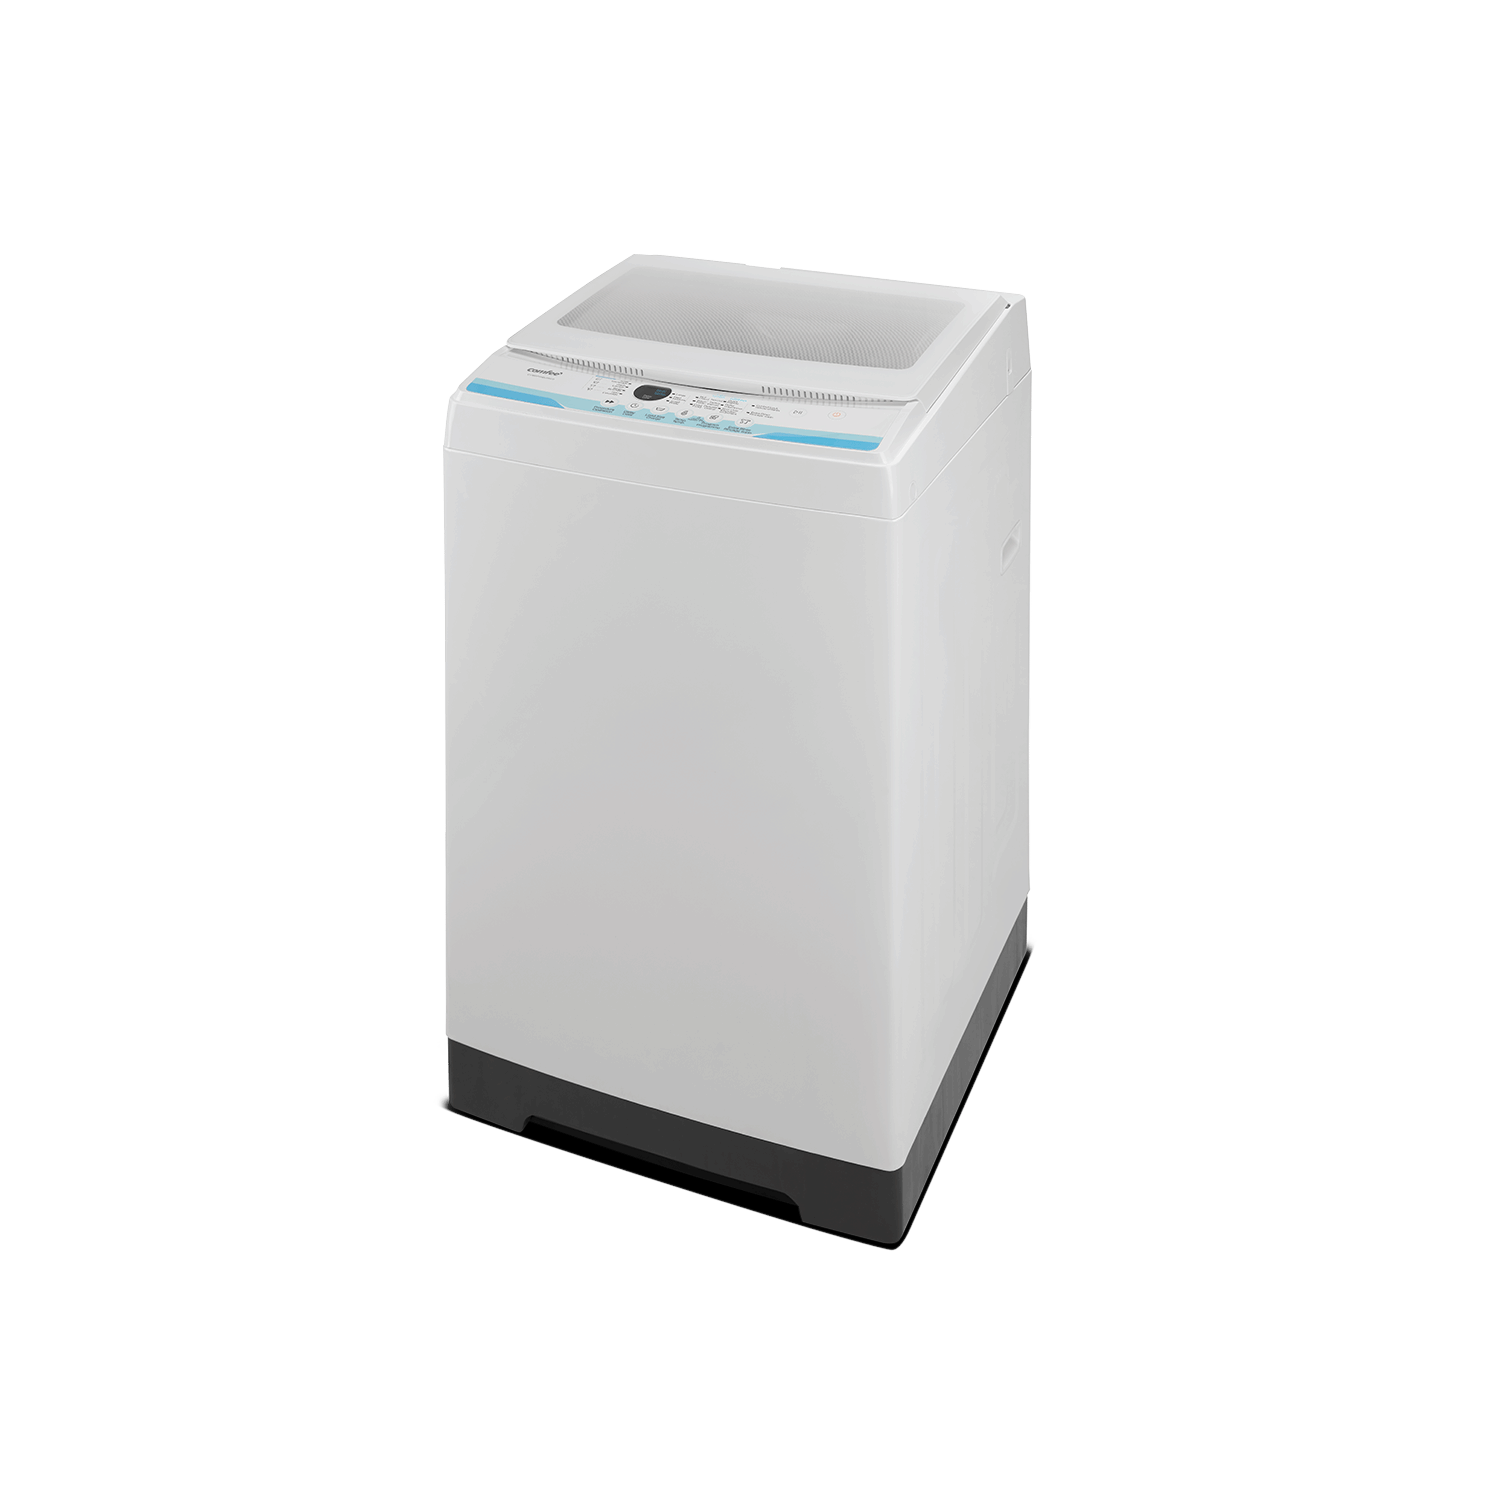 1.0 Cu.Ft. Portable Washing Machine – Canada